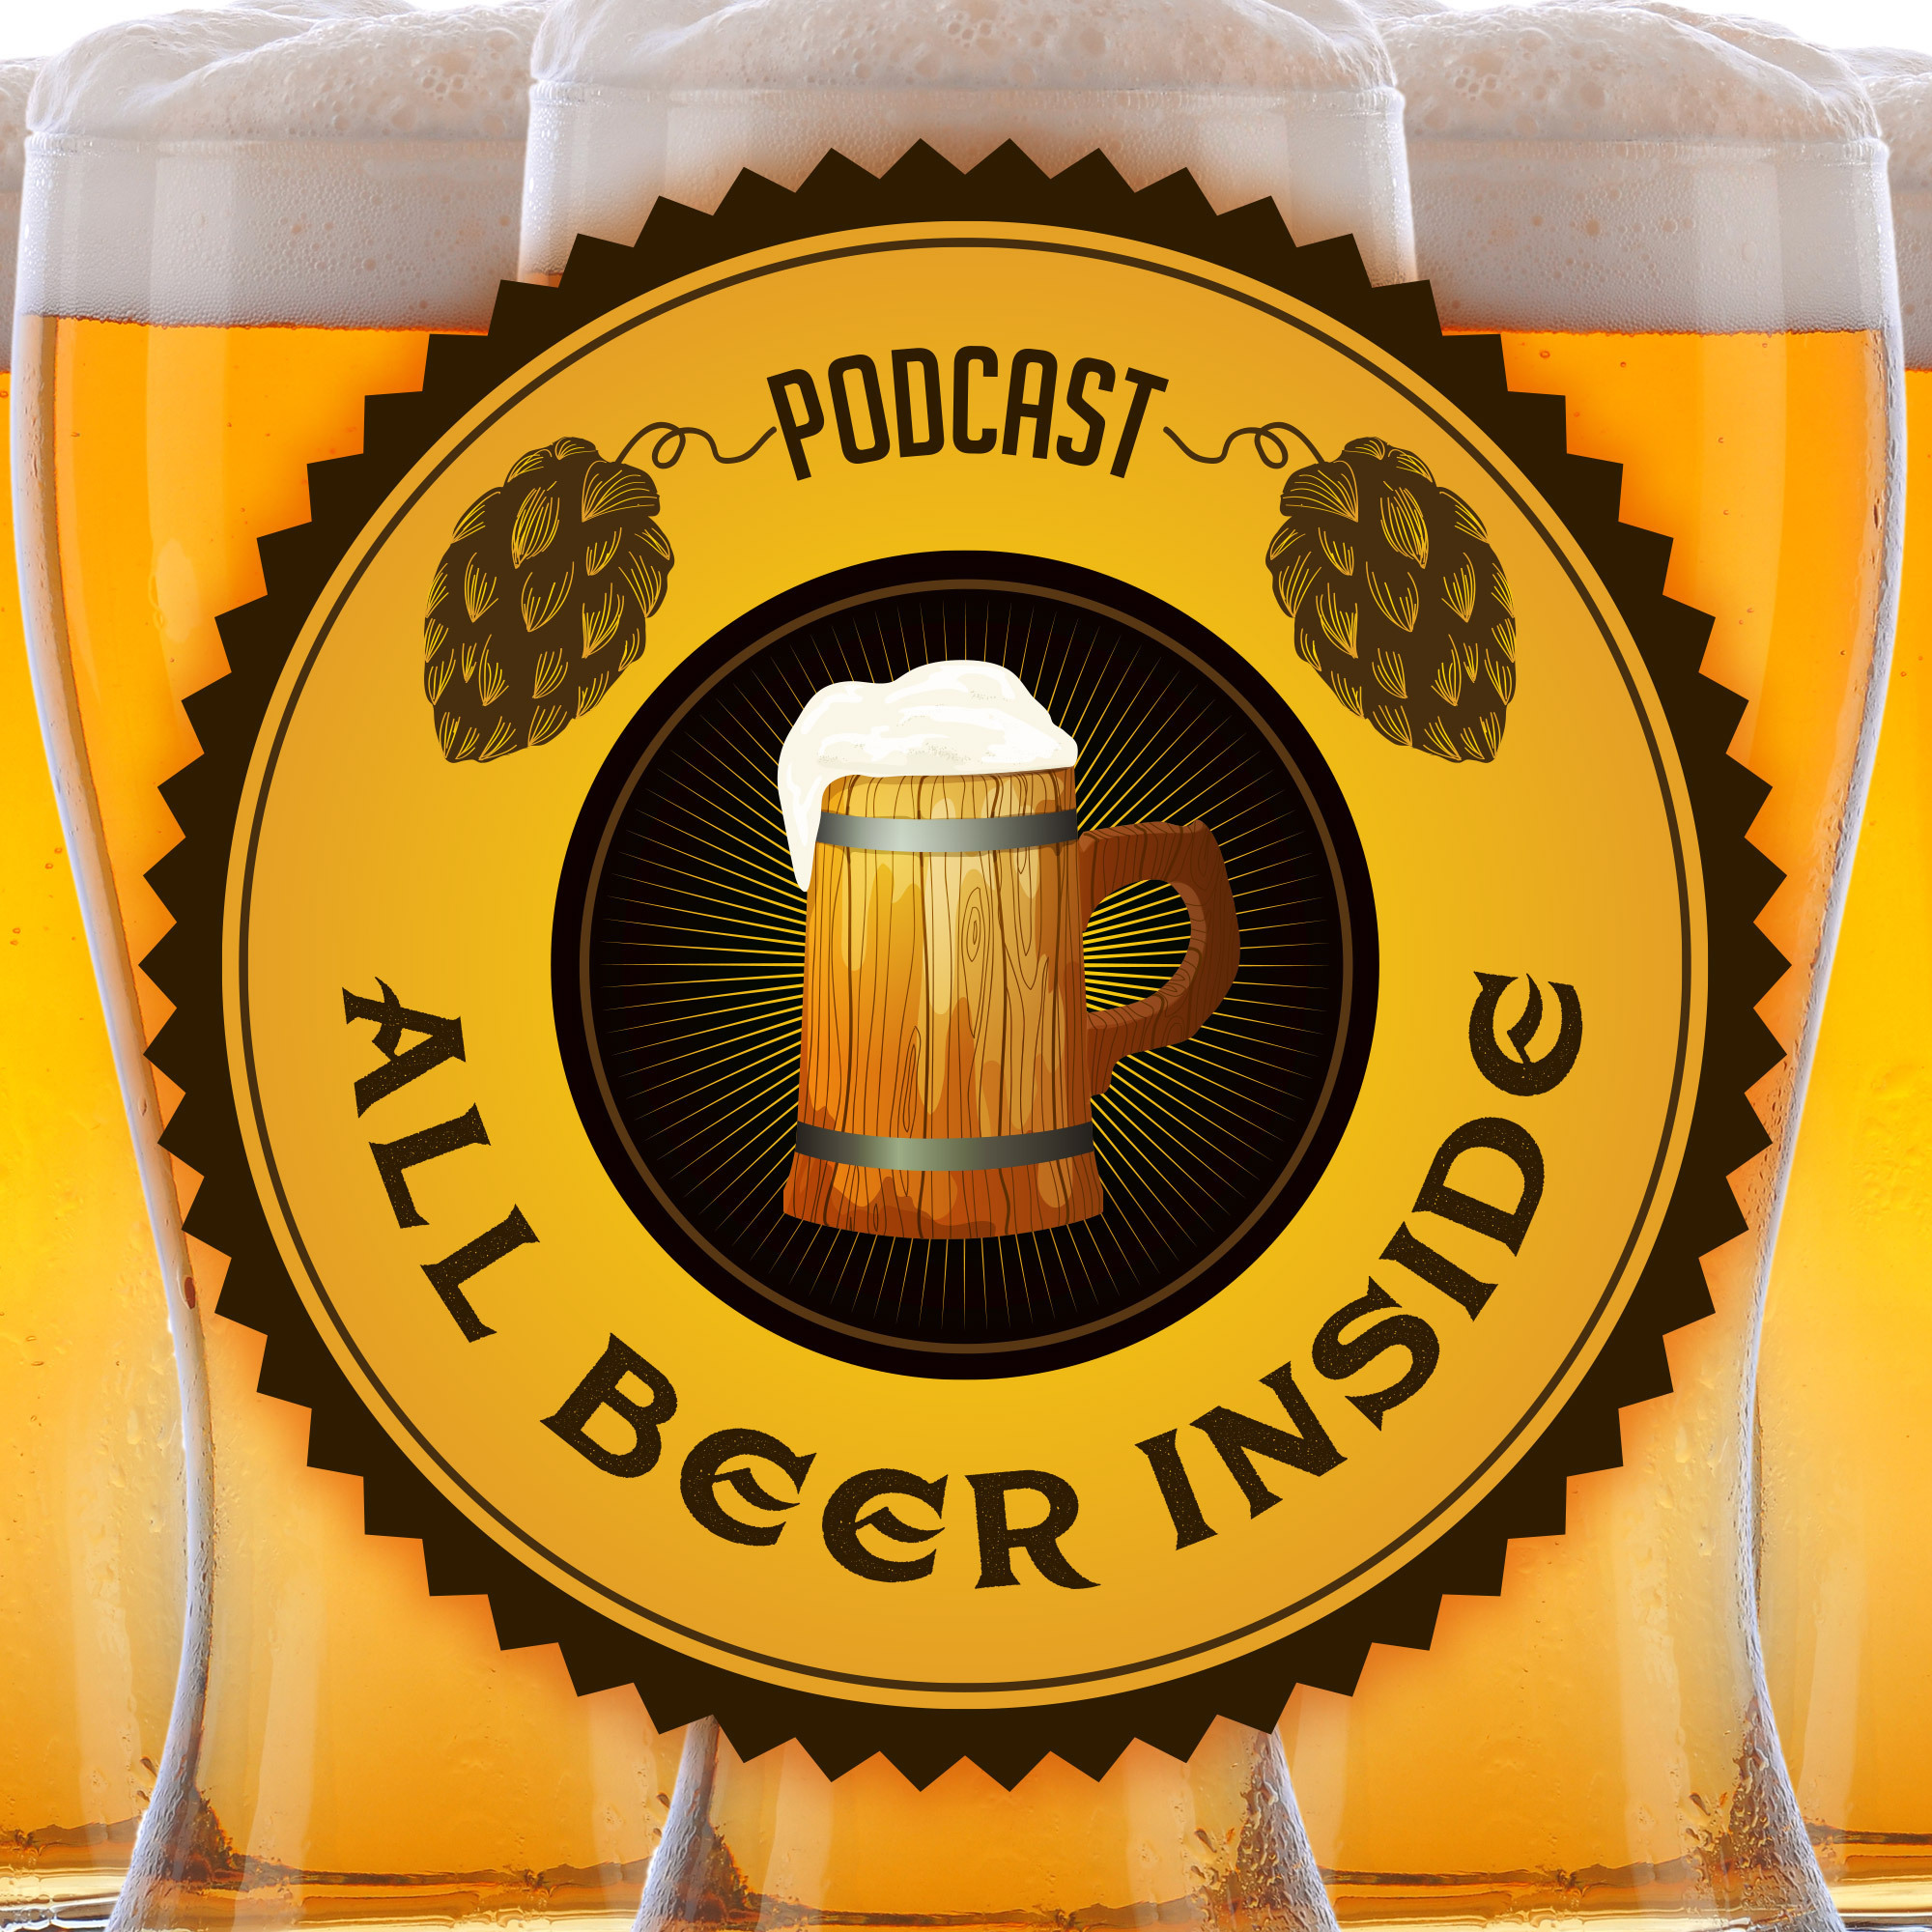 All Beer Inside Episode 7 - Robots and Dicks